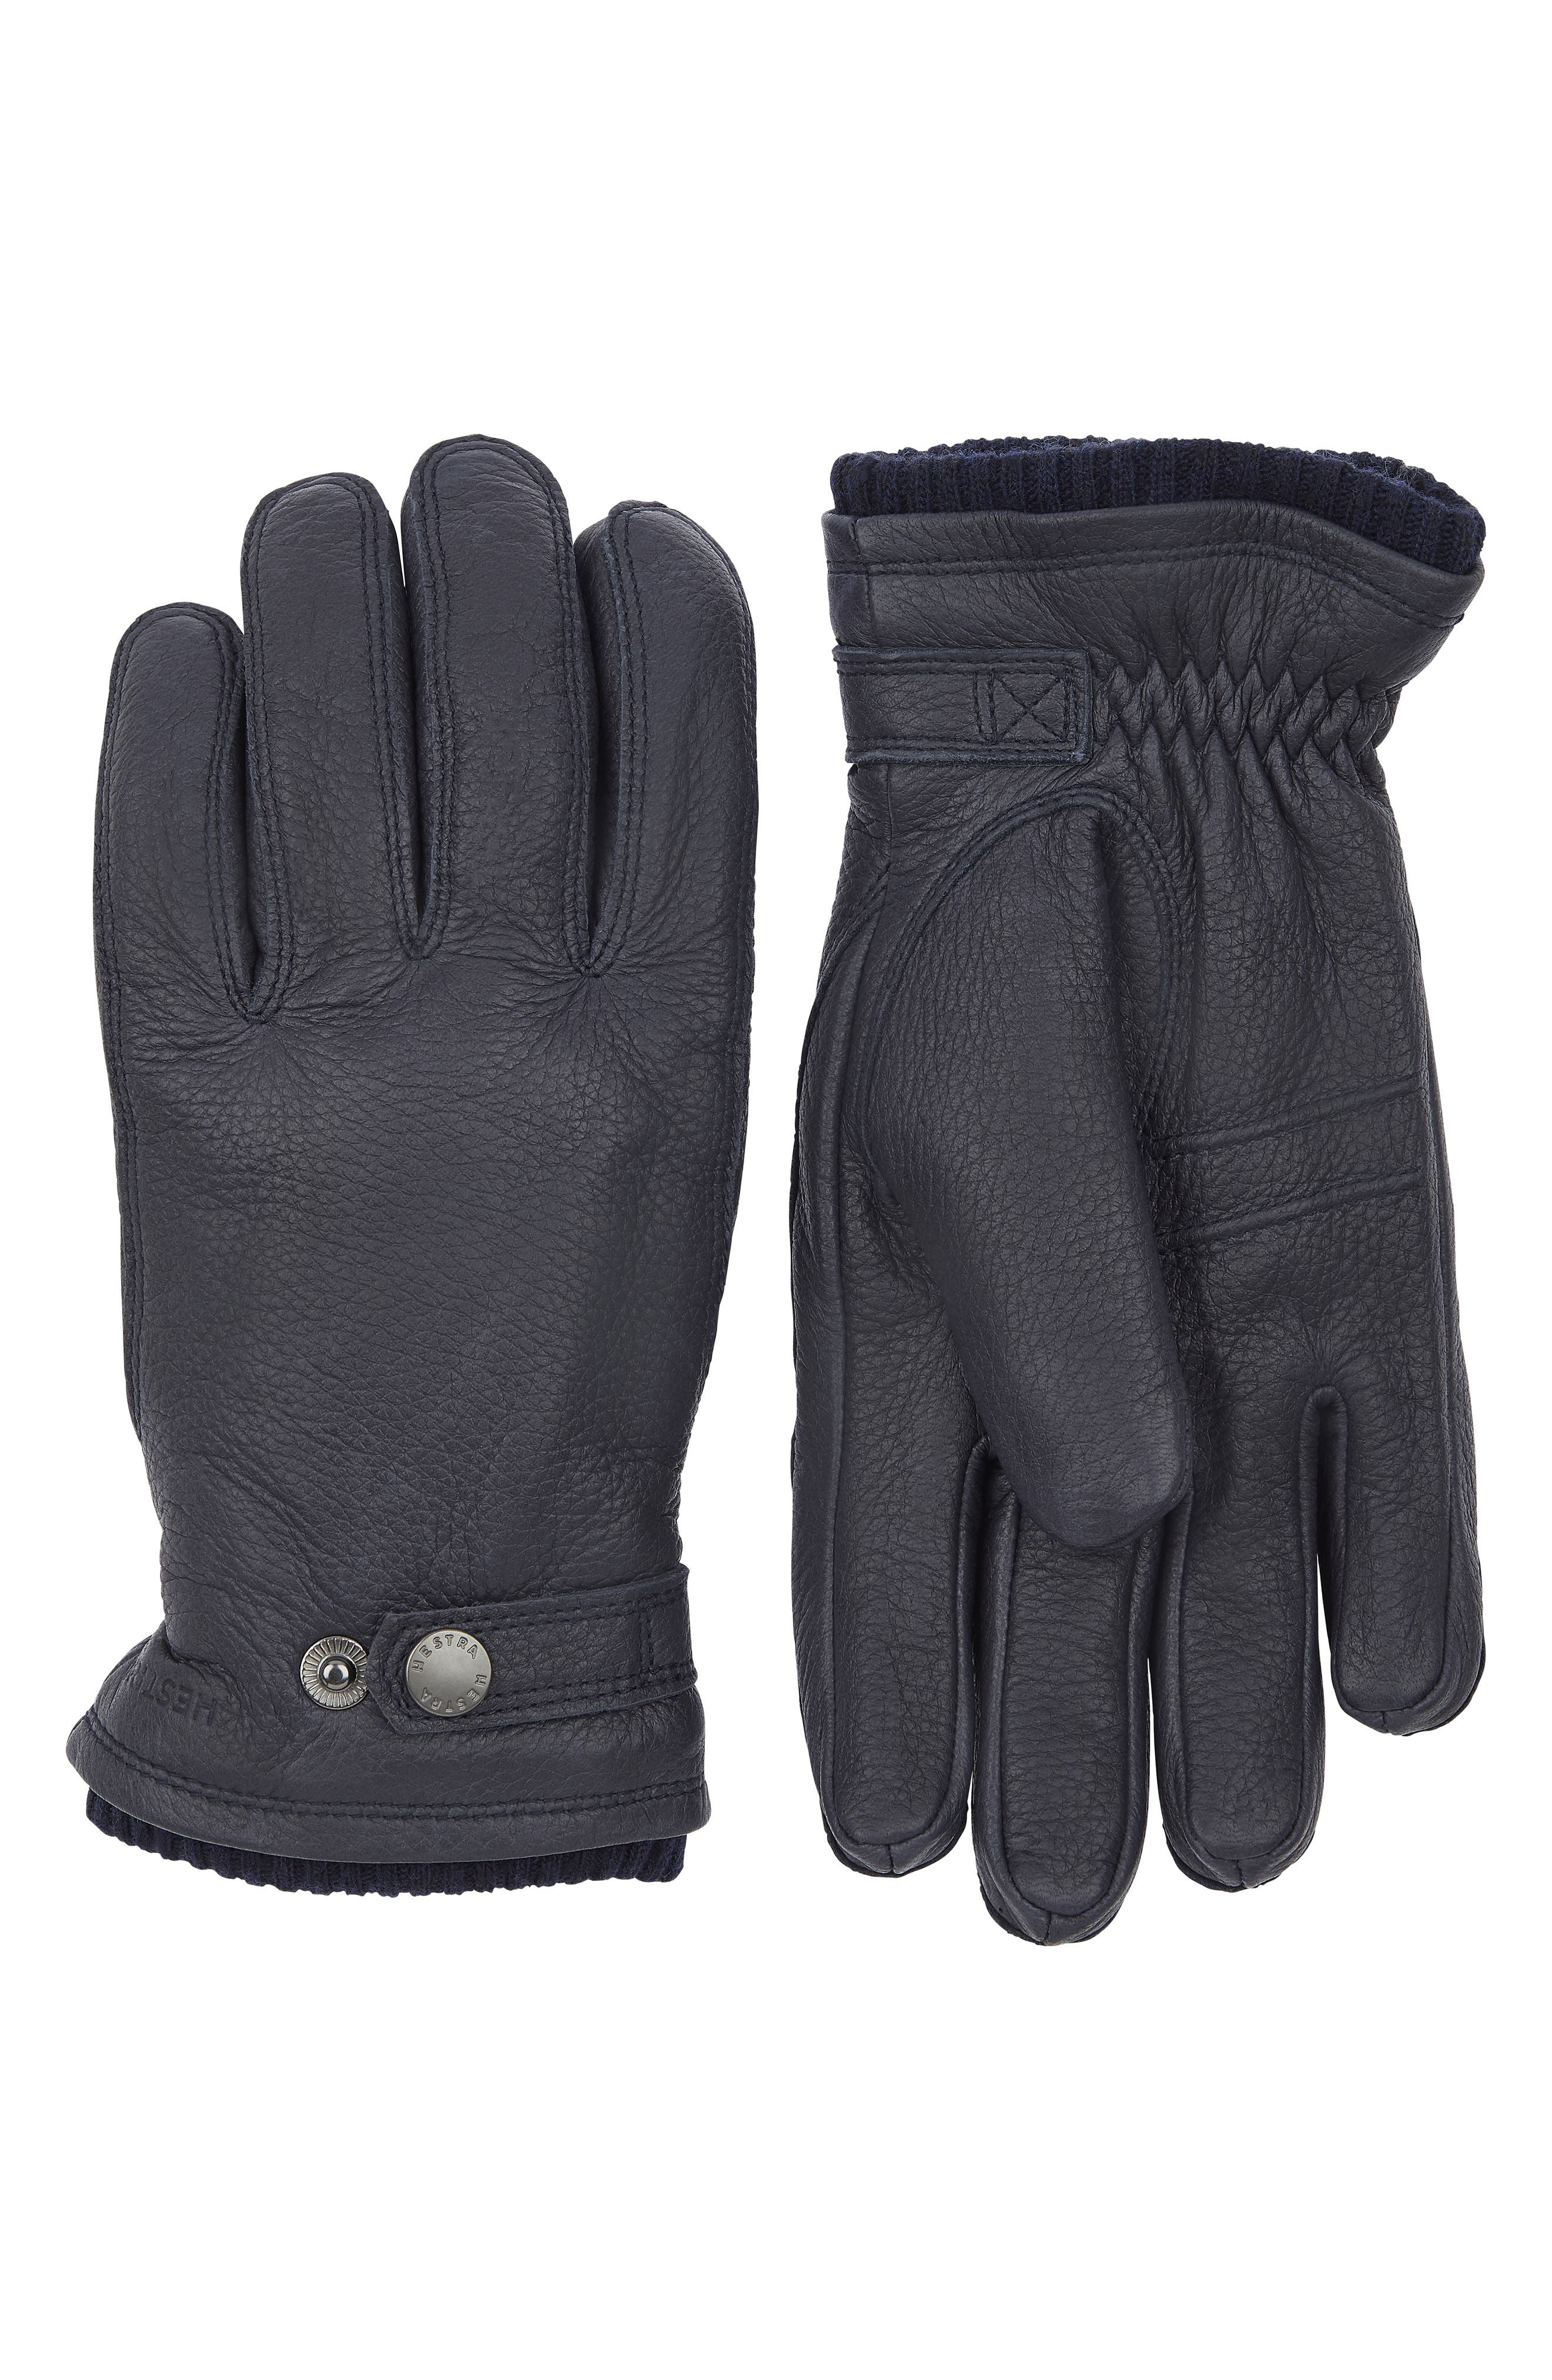 Hestra Utsjo Leather Gloves in Navy at Nordstrom